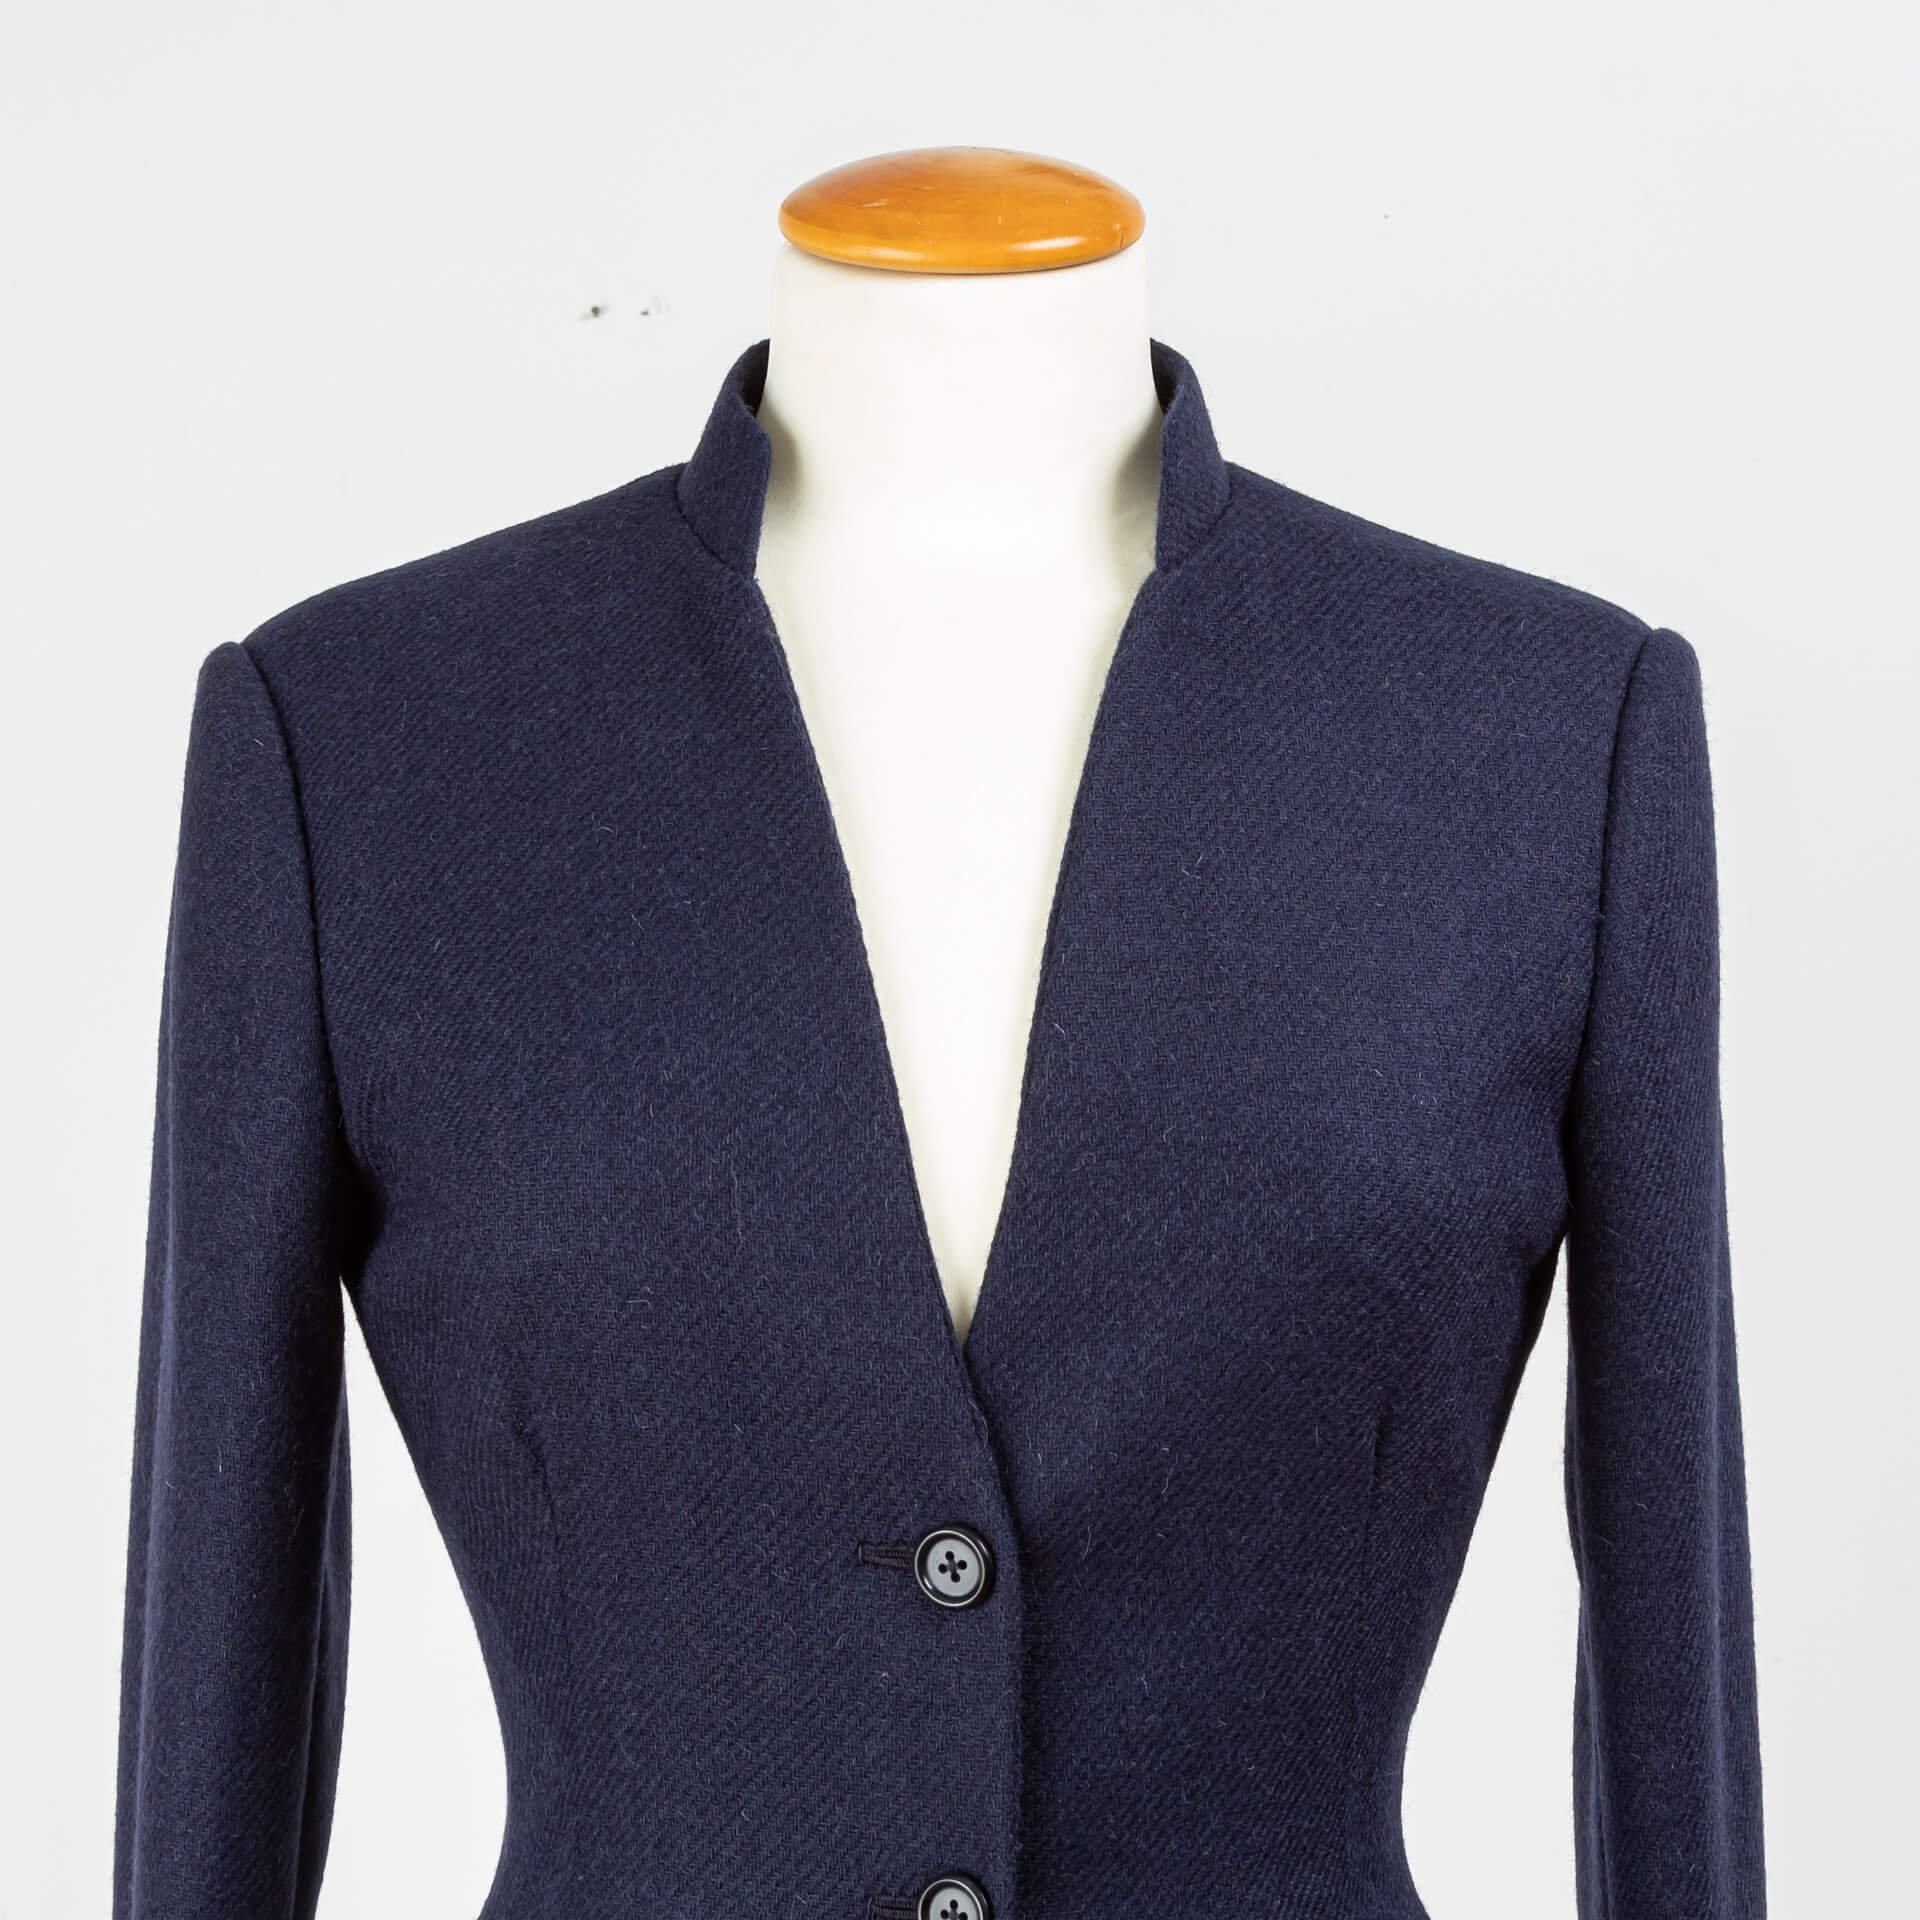 Ladies Jacket Stand-Up Collar